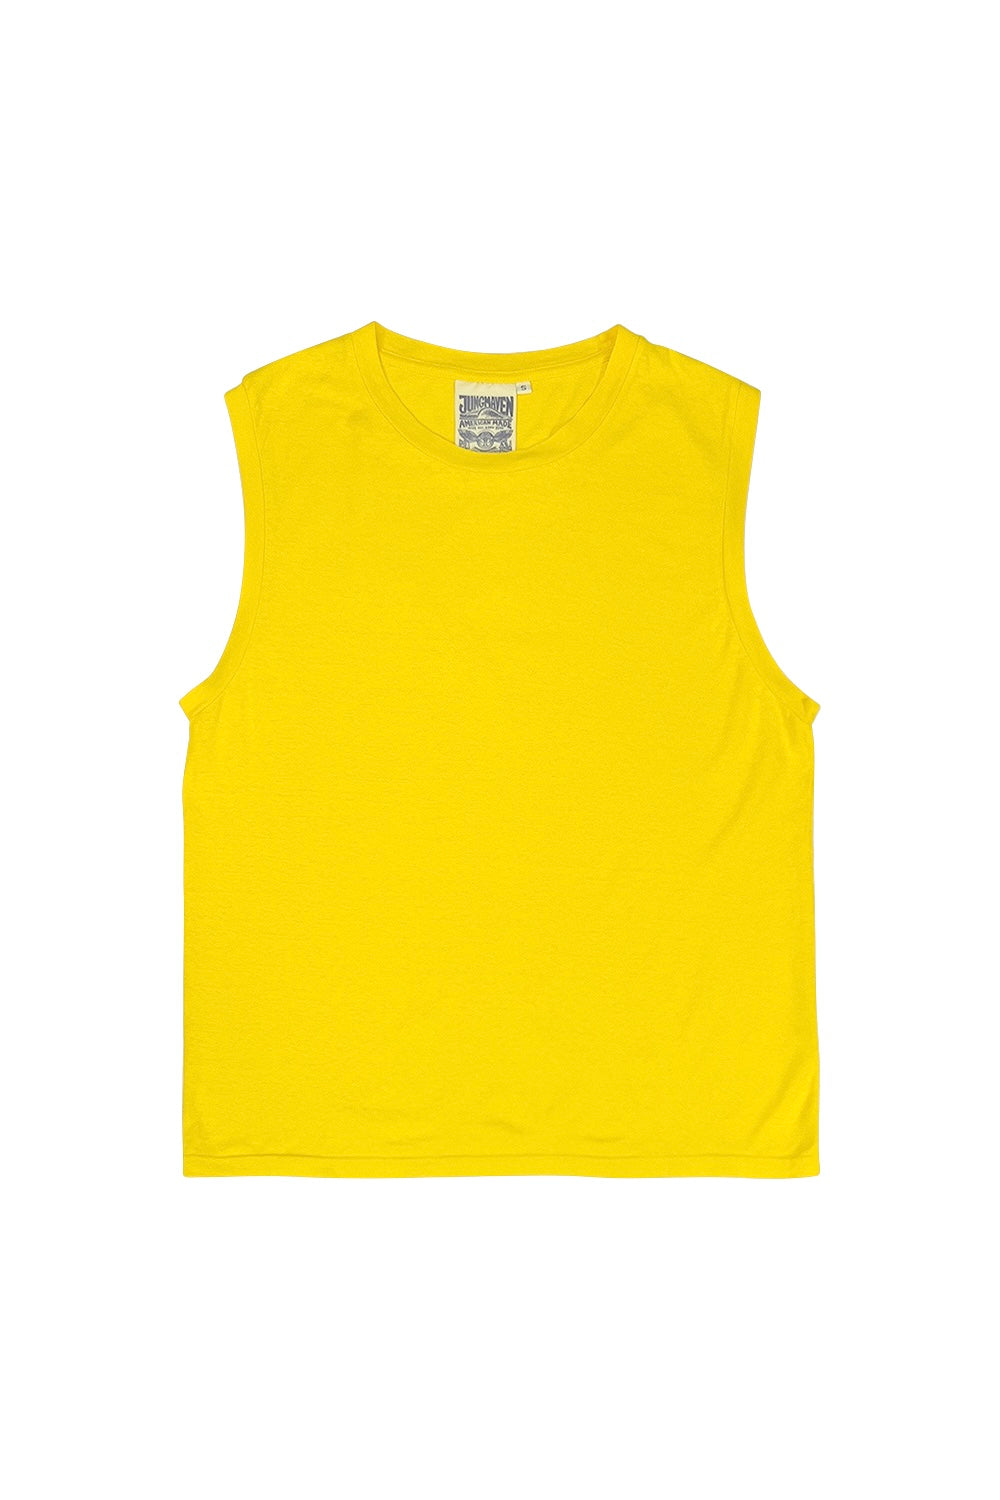 Malibu Muscle Tee | Jungmaven Hemp Clothing & Accessories / Color: Sunshine Yellow